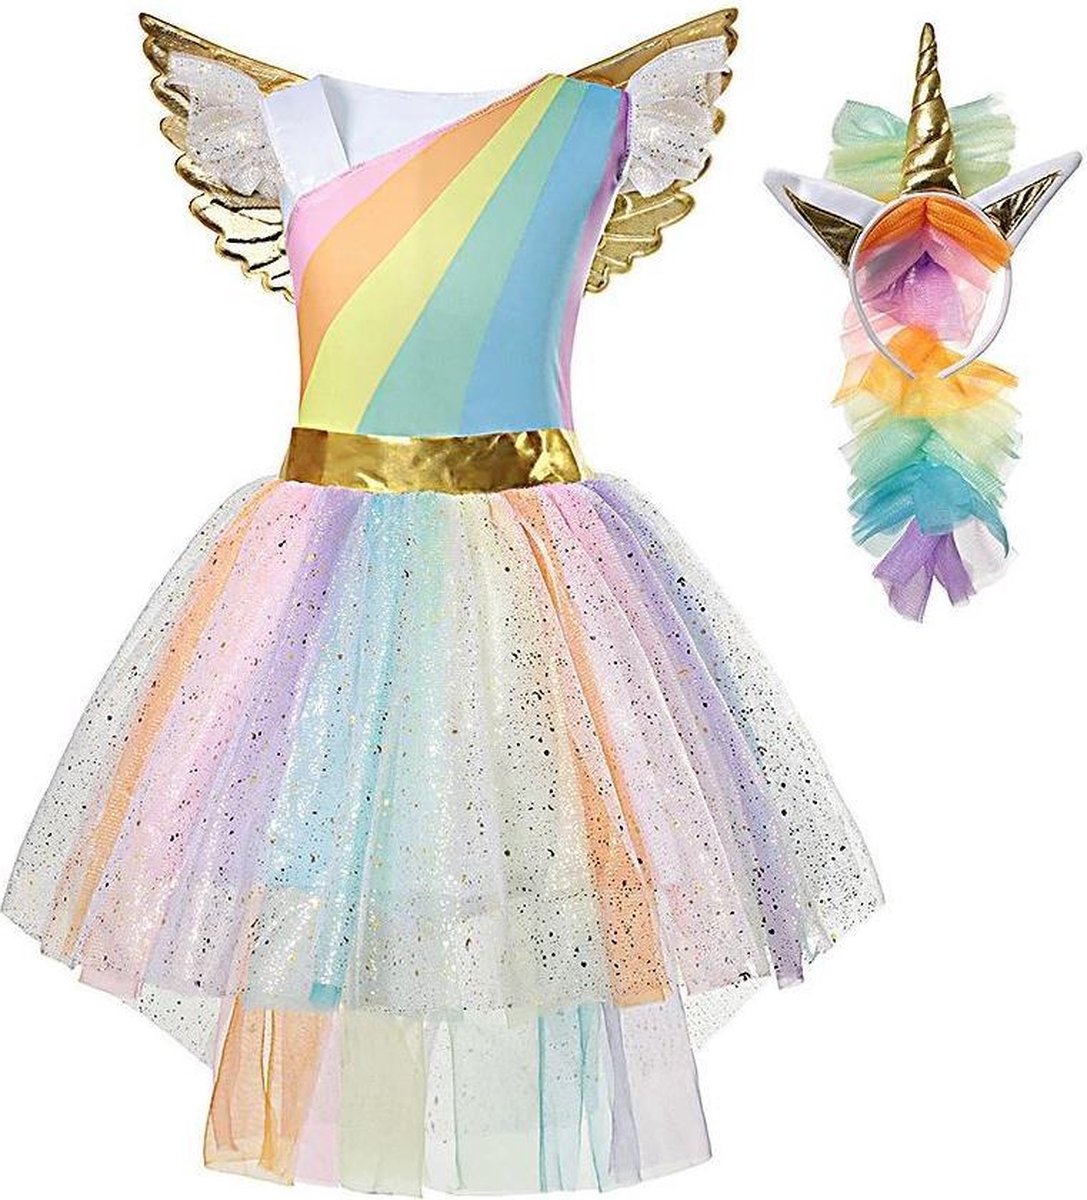 Eenhoorn jurk unicorn jurk eenhoorn kostuum - 116-122 (M) regenboog jurk verkleed jurk + haarband - Prinsessenjurk meisje speelgoed verjaardag - La Señorita